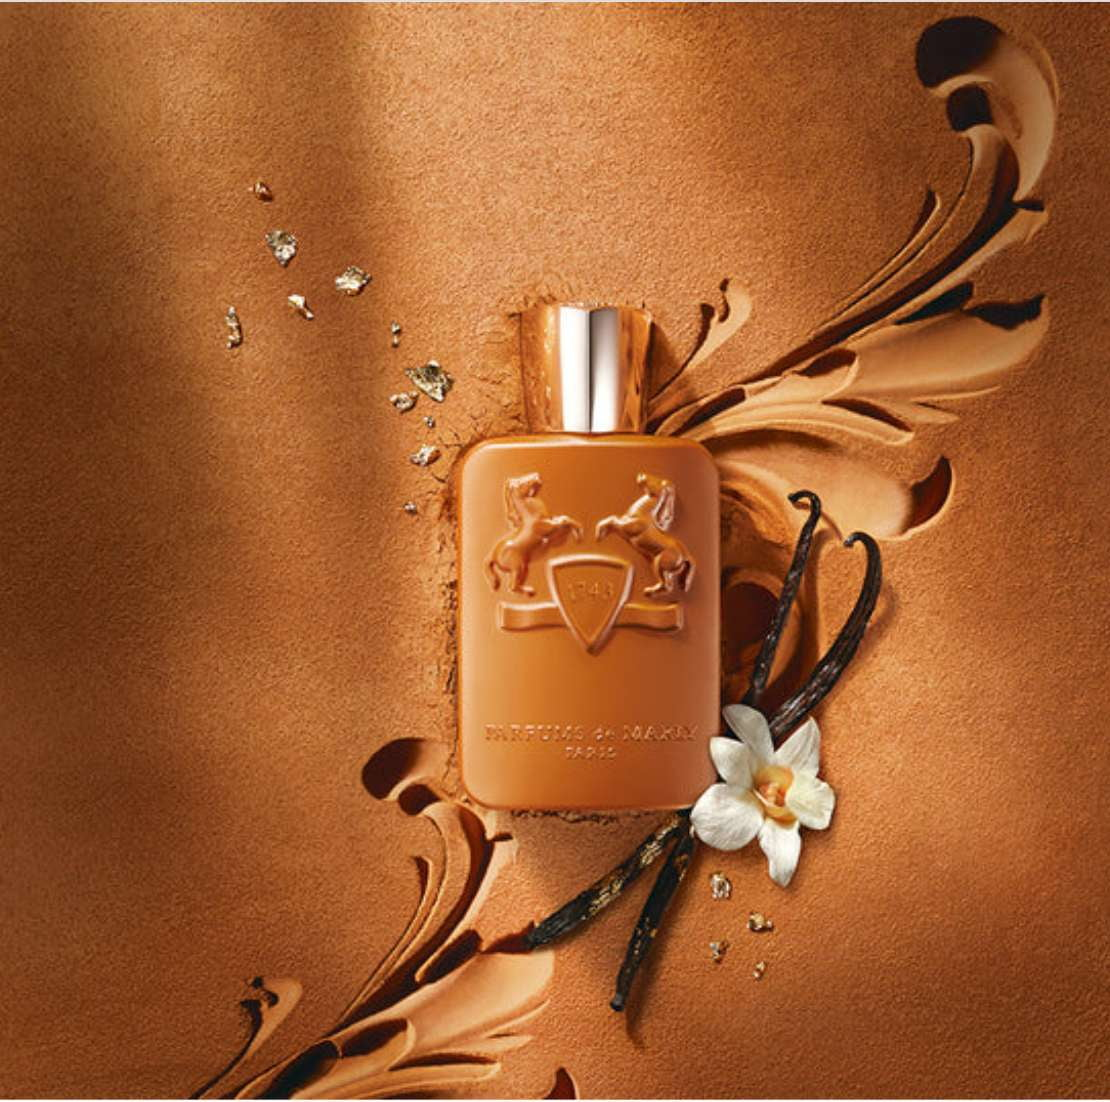 ALTHAÏR: NOBLE VANILLA - Parfums de Marly - INDIEHOUSE modern fragrances